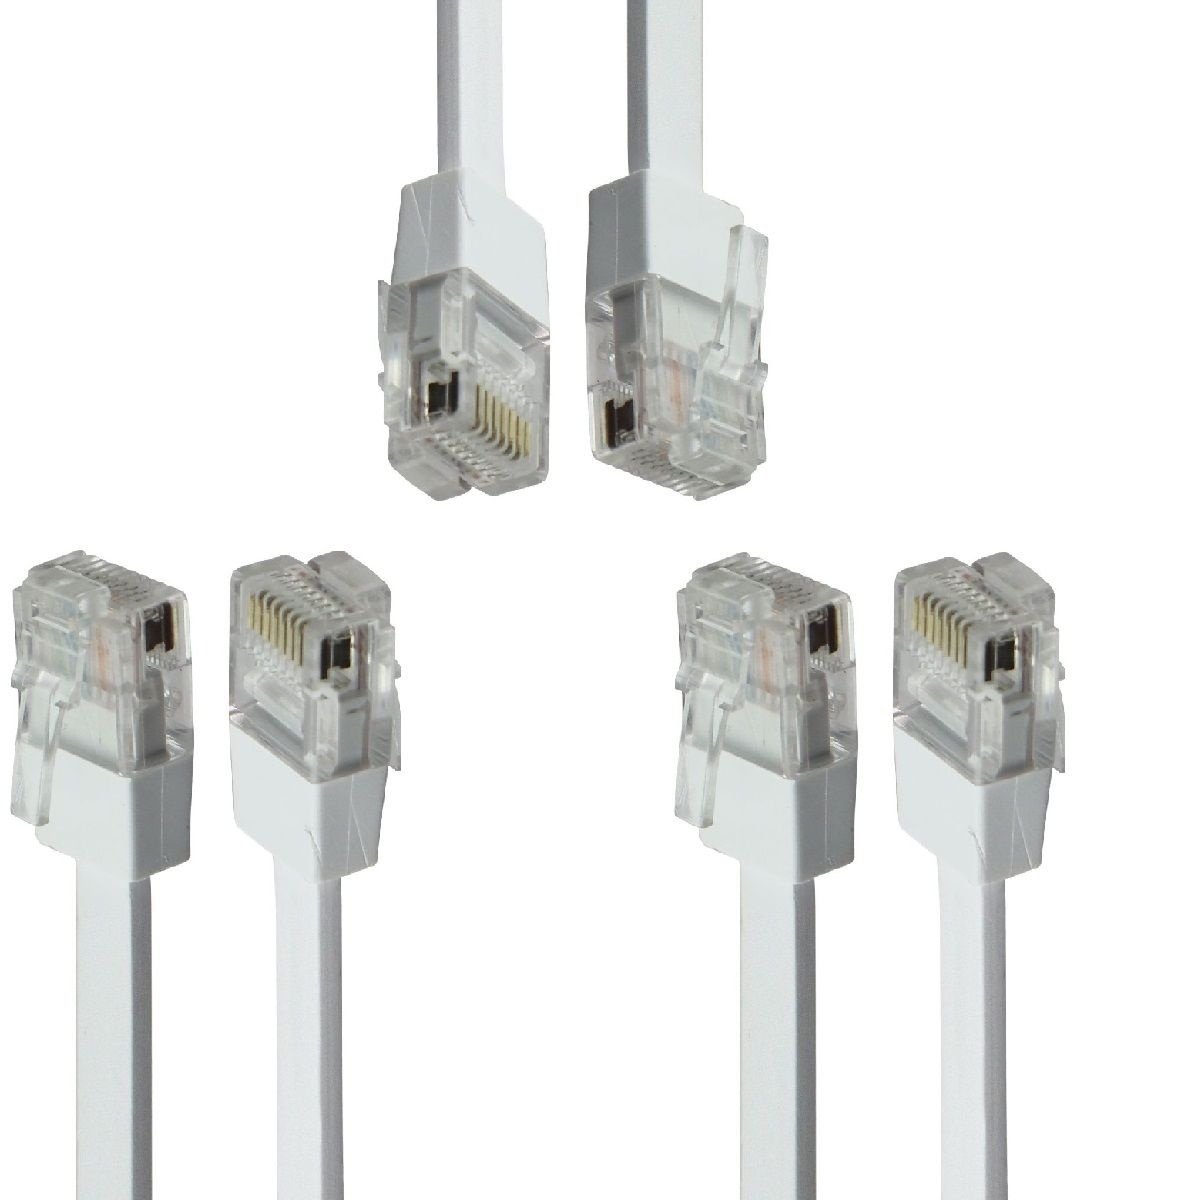 3x Google (6-Ft) Ethernet Cable RJ45 Gigabit Flat Network Cord - White (E212689)